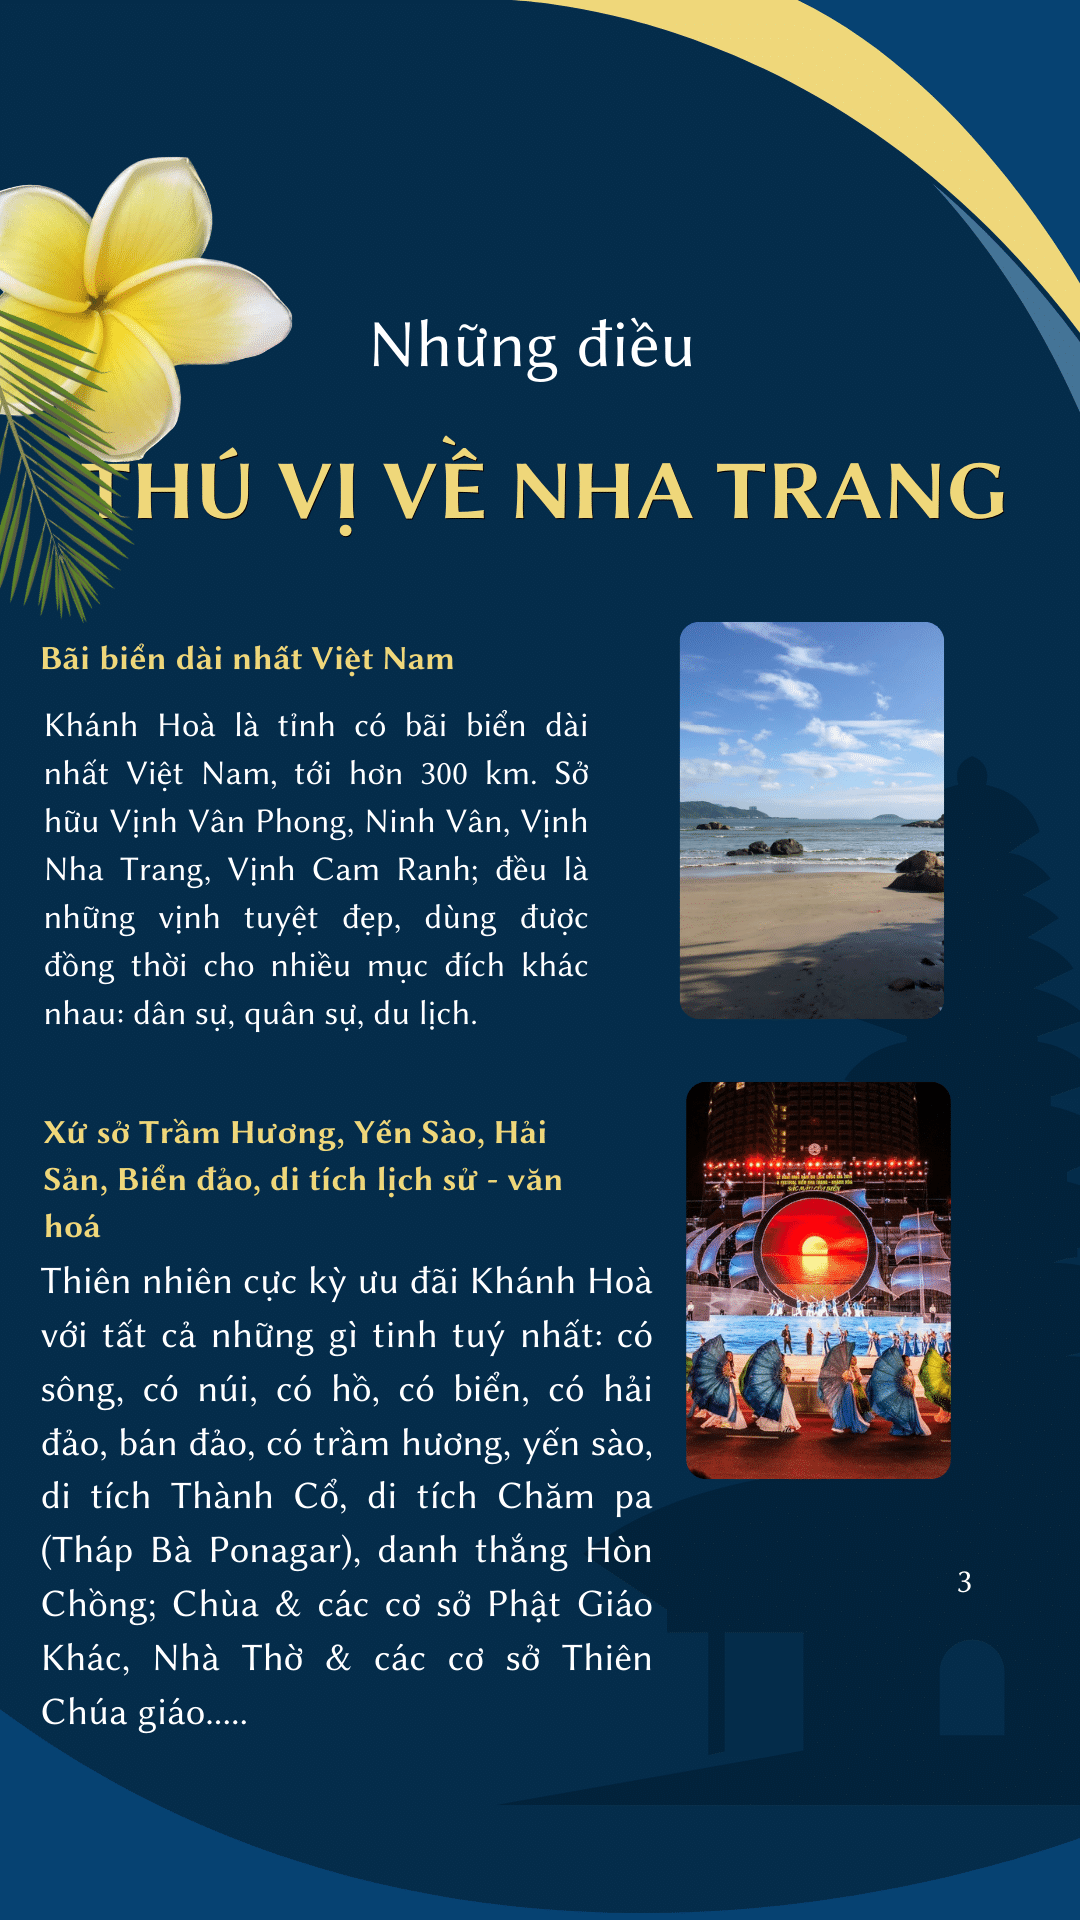 Cam nang du lich Nha Trang 04